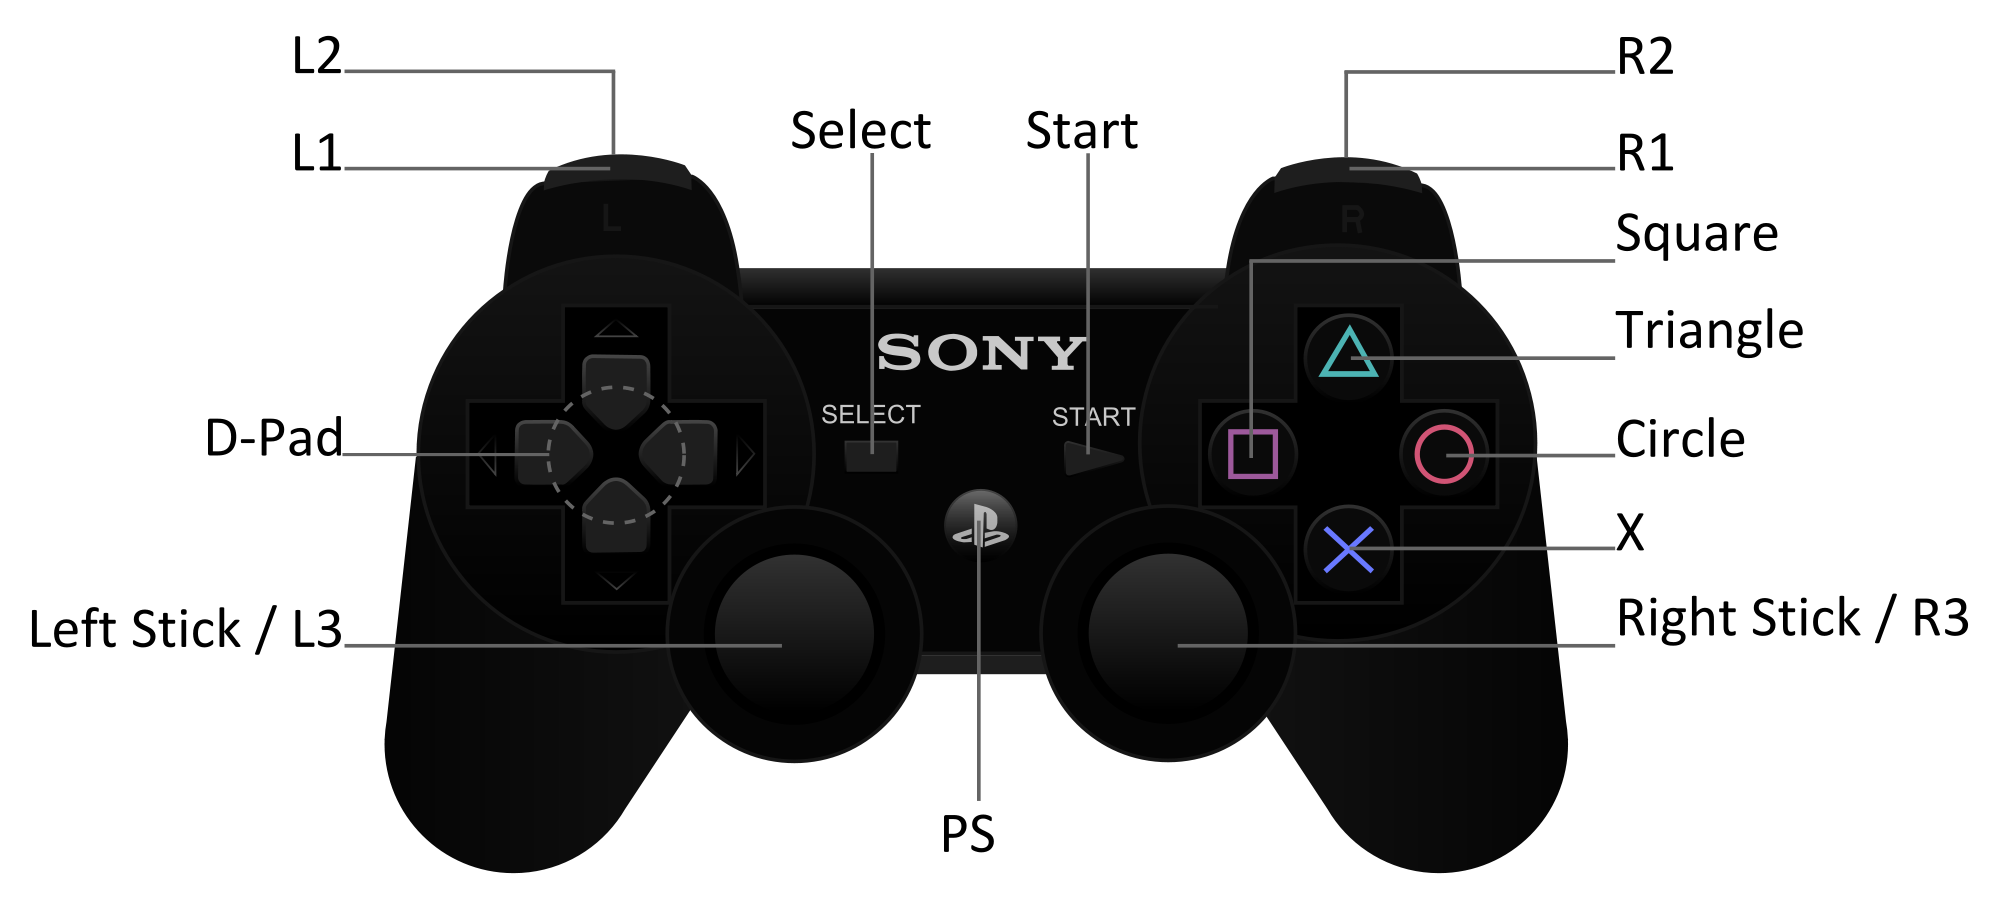 Персонаж на джойстике. Ps4 геймпад кнопка r3. Кнопка r на джойстике Sony PLAYSTATION 4. L3 кнопка на джойстике пс3. L2 lt на джойстике ps5.